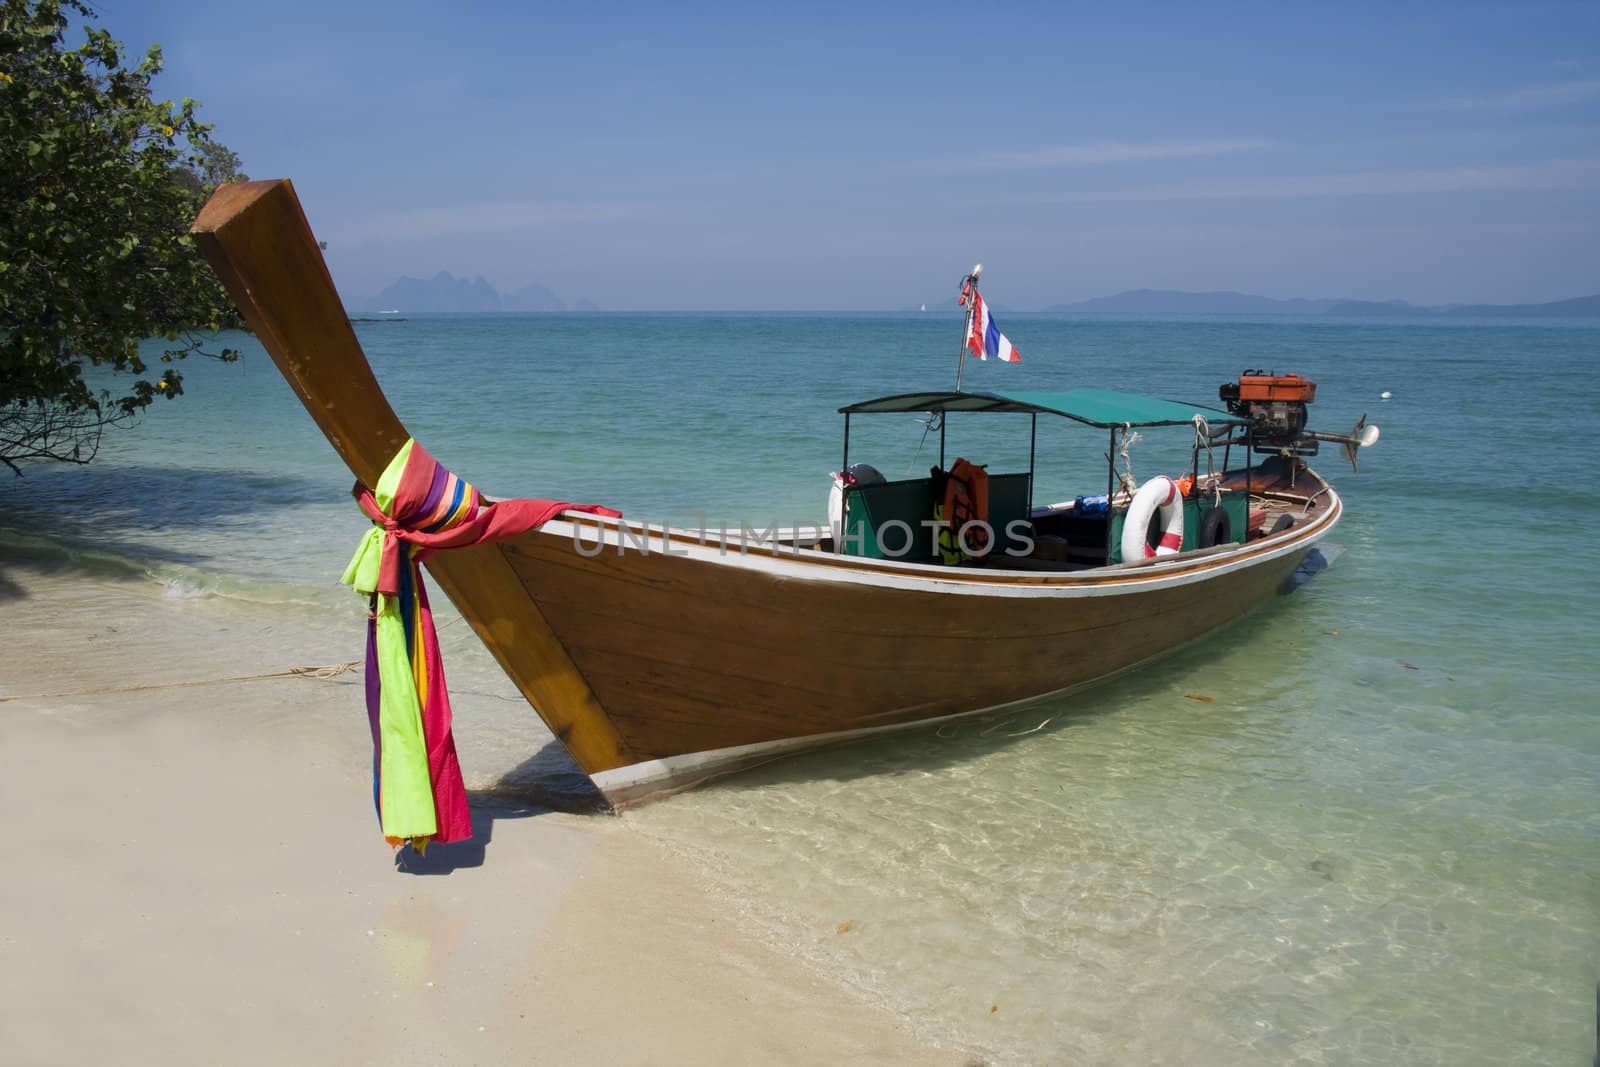 Long tailed boat, Koh Naka, Thailand